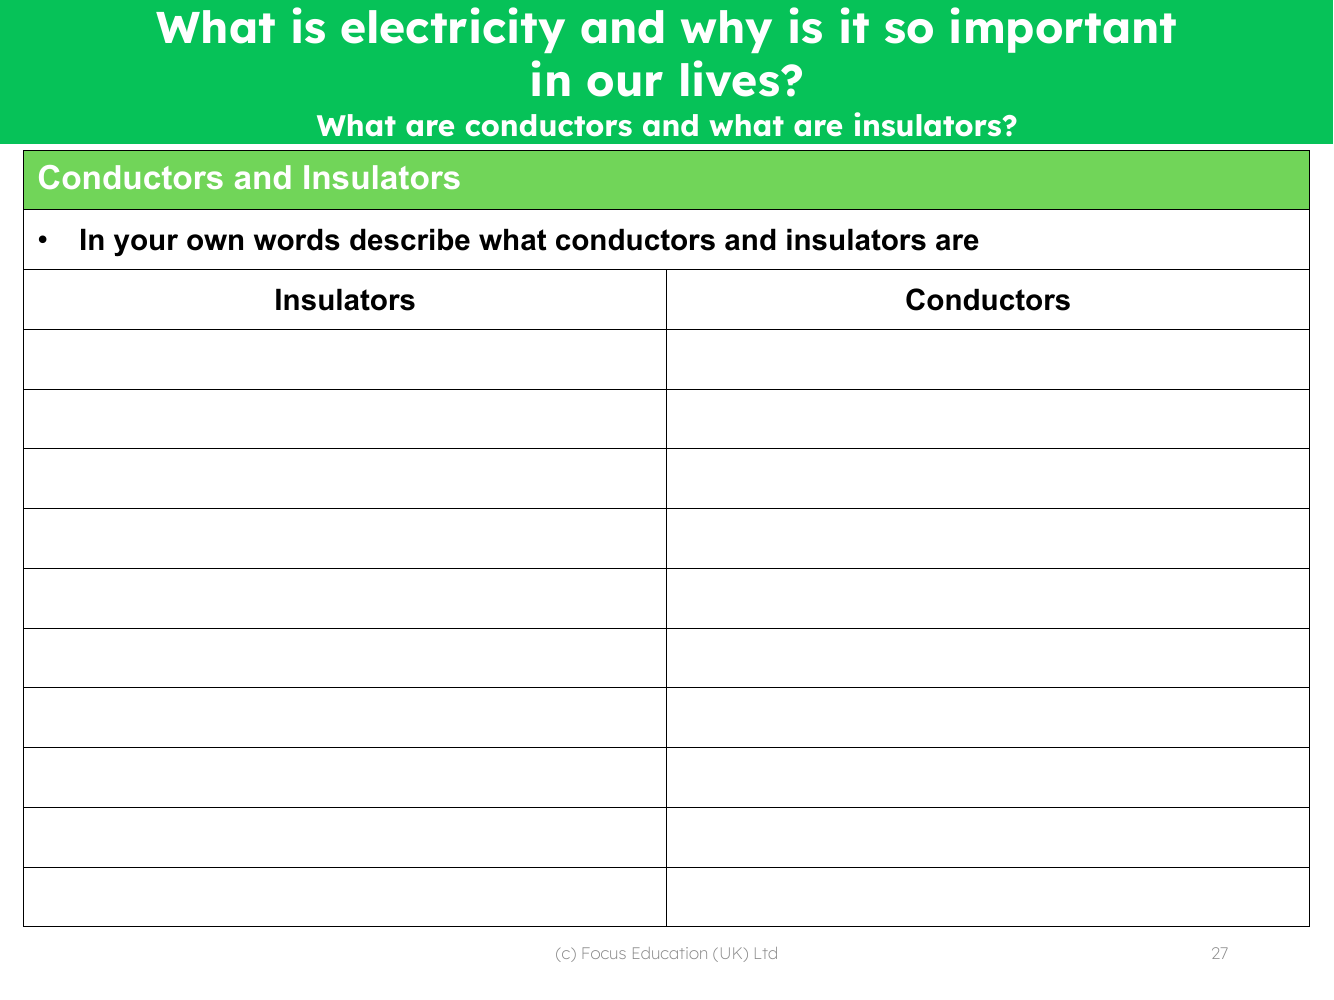 Conductors and insulators - Writing task